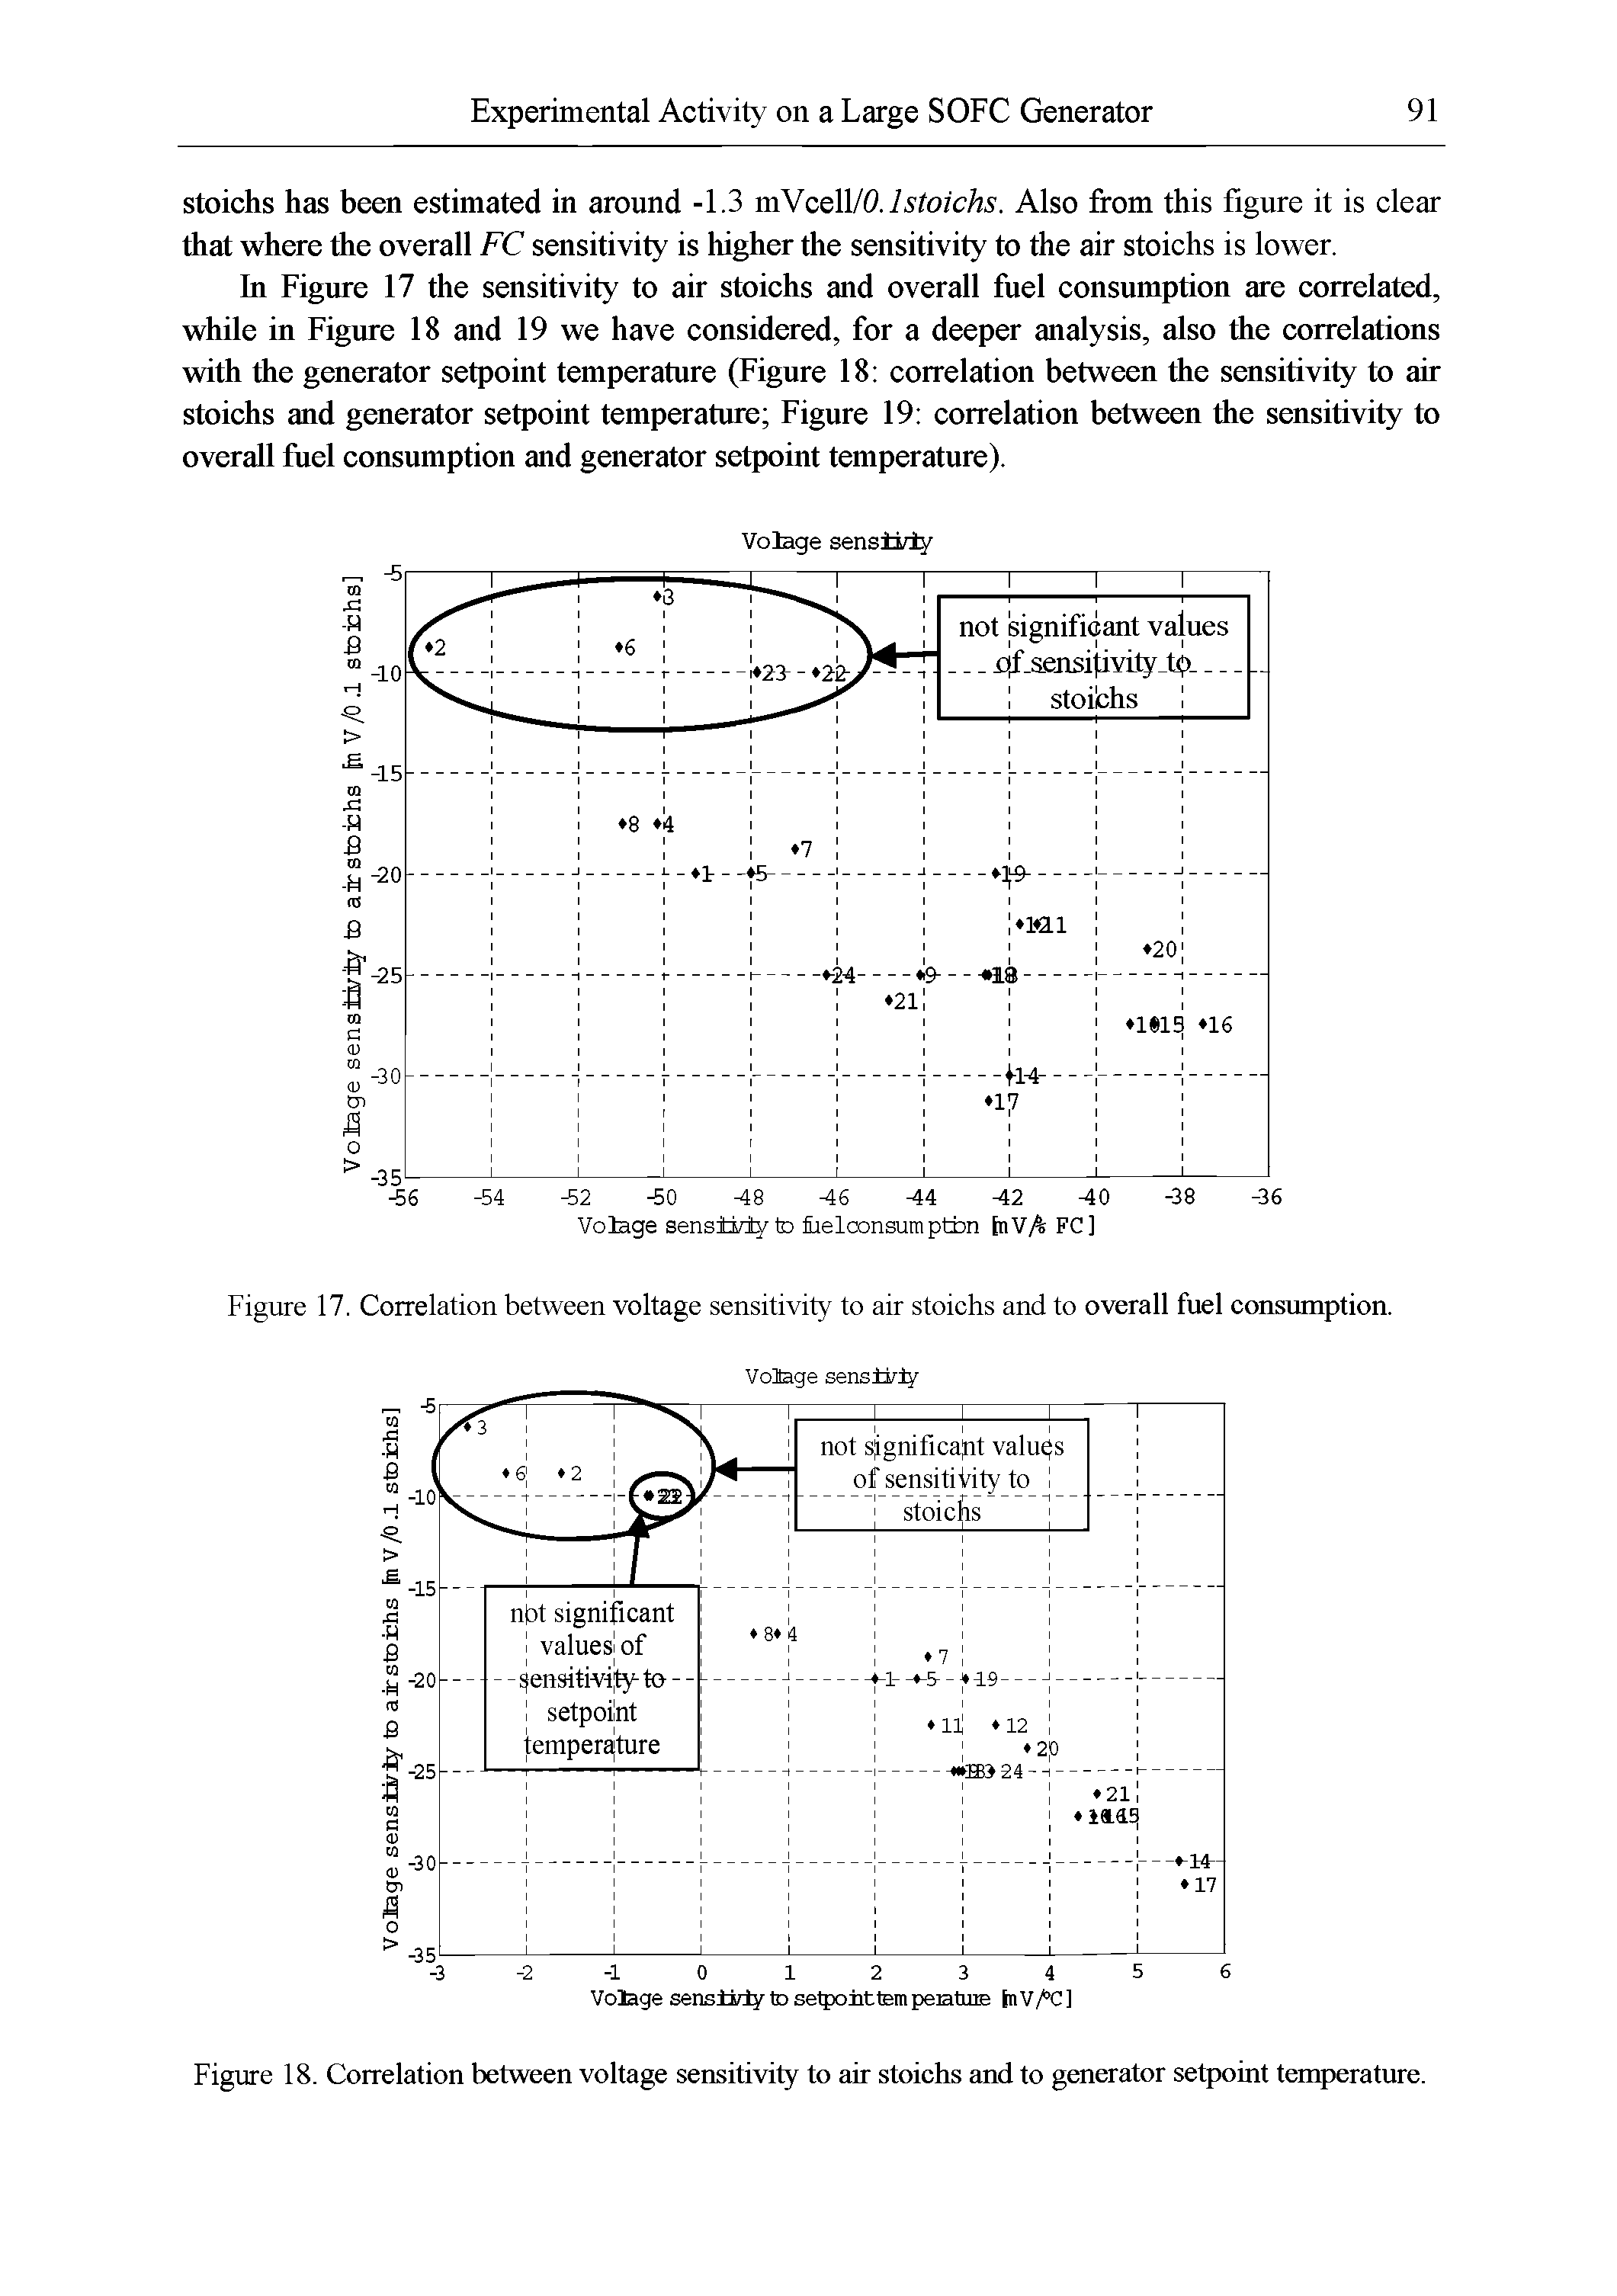 Figure 18. Correlation between voltage sensitivity to air stoichs and to generator setpoint temperature.